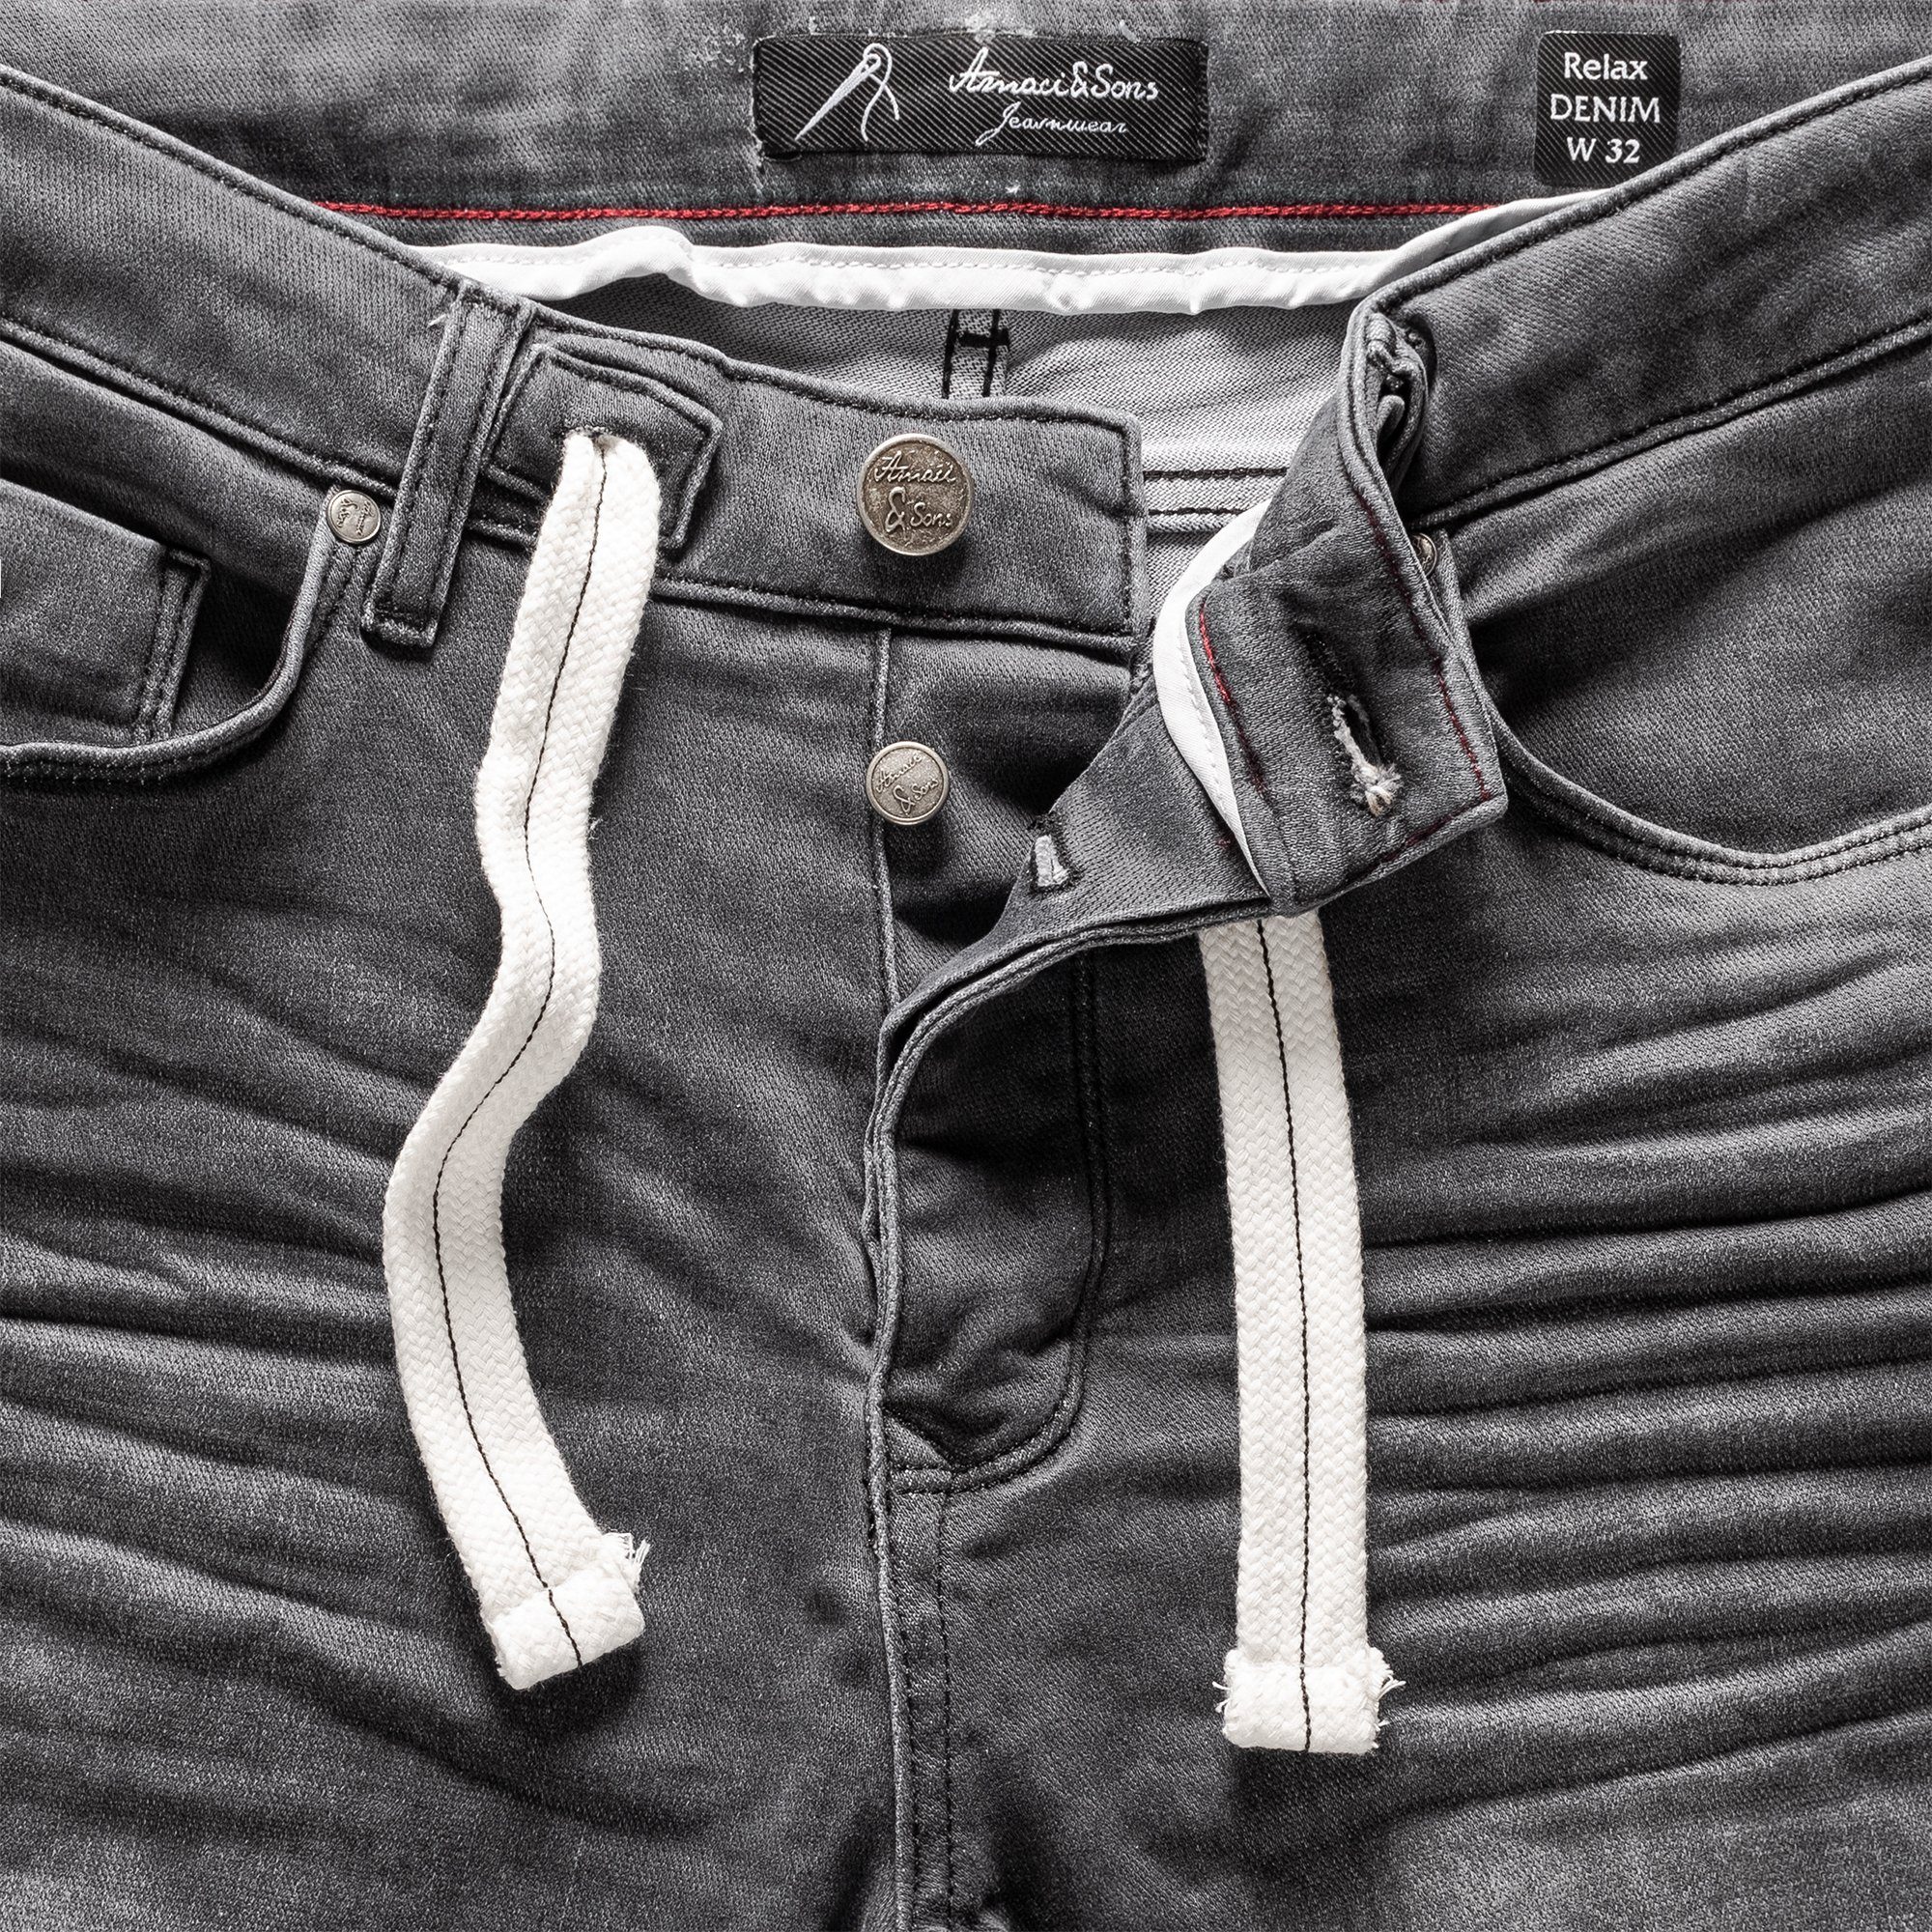 Jeansshorts Destroyed Amaci&Sons Jeans SAN JOSE Shorts Grau